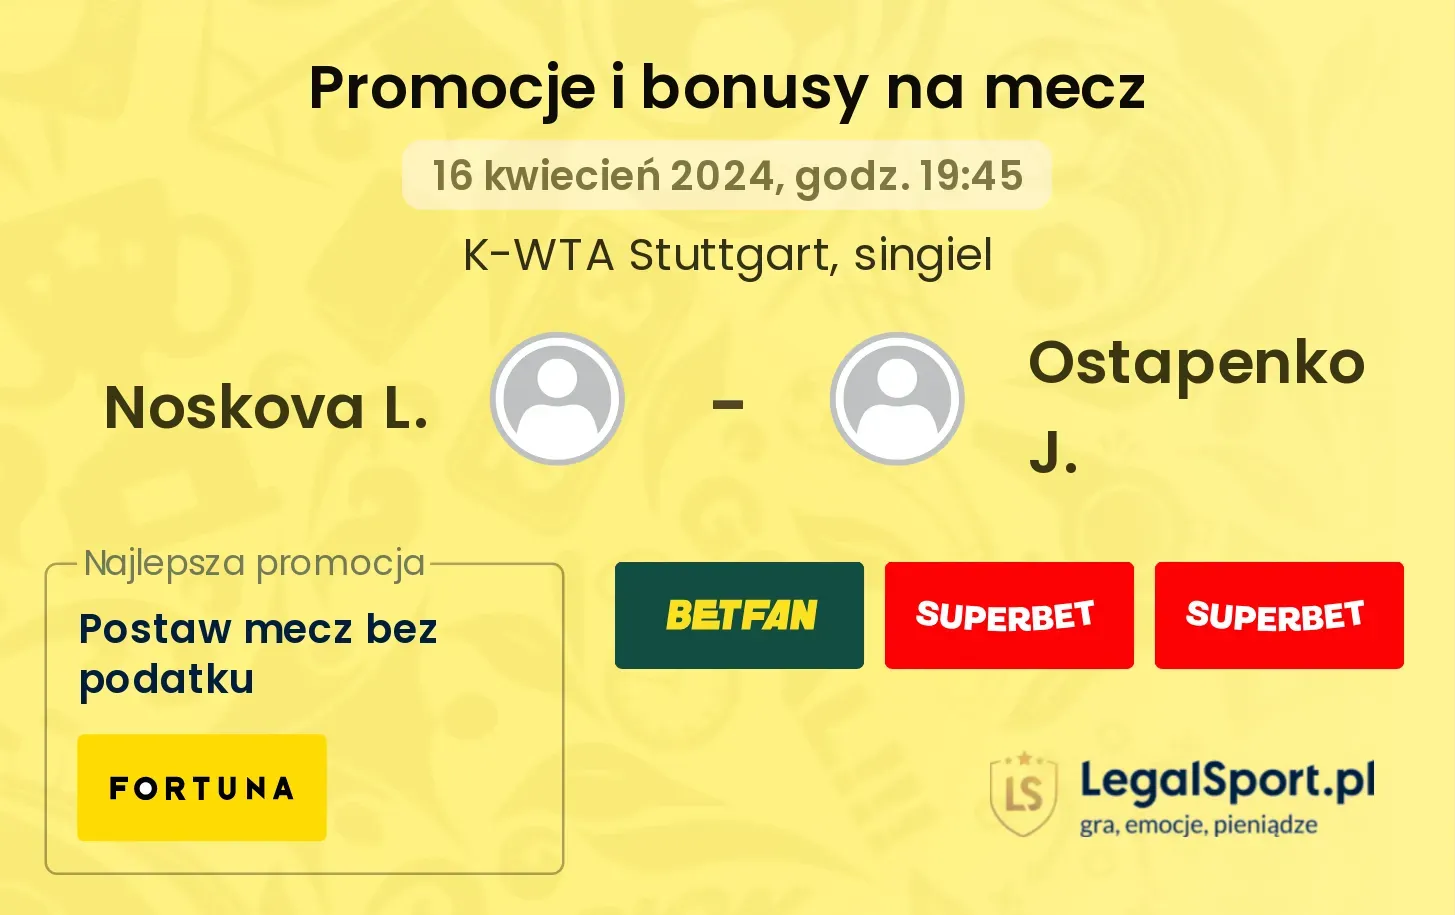 Noskova L. - Ostapenko J. promocje bonusy na mecz